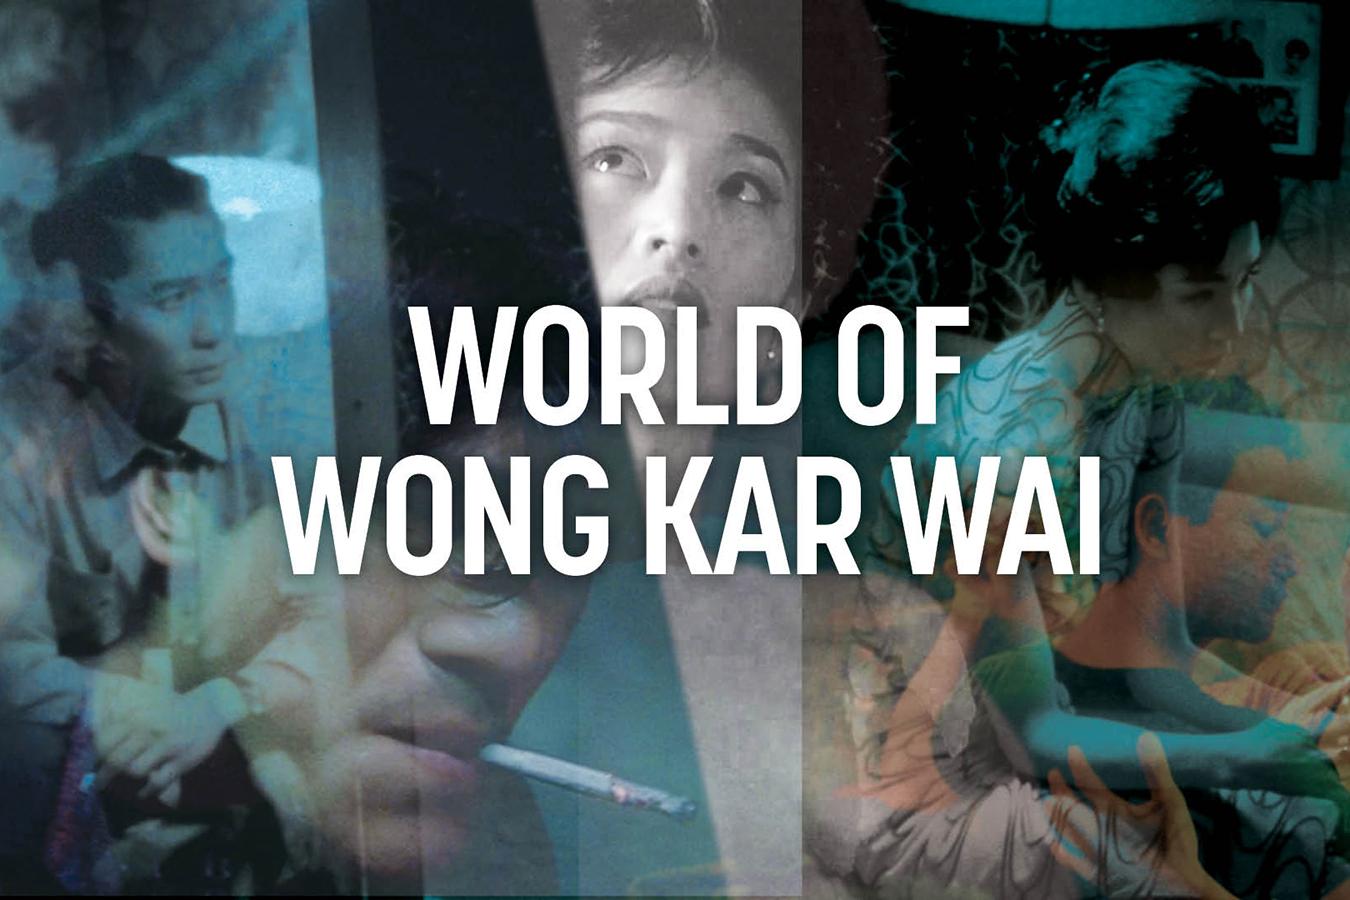 World of Wong Kar Wai - collage of movie images